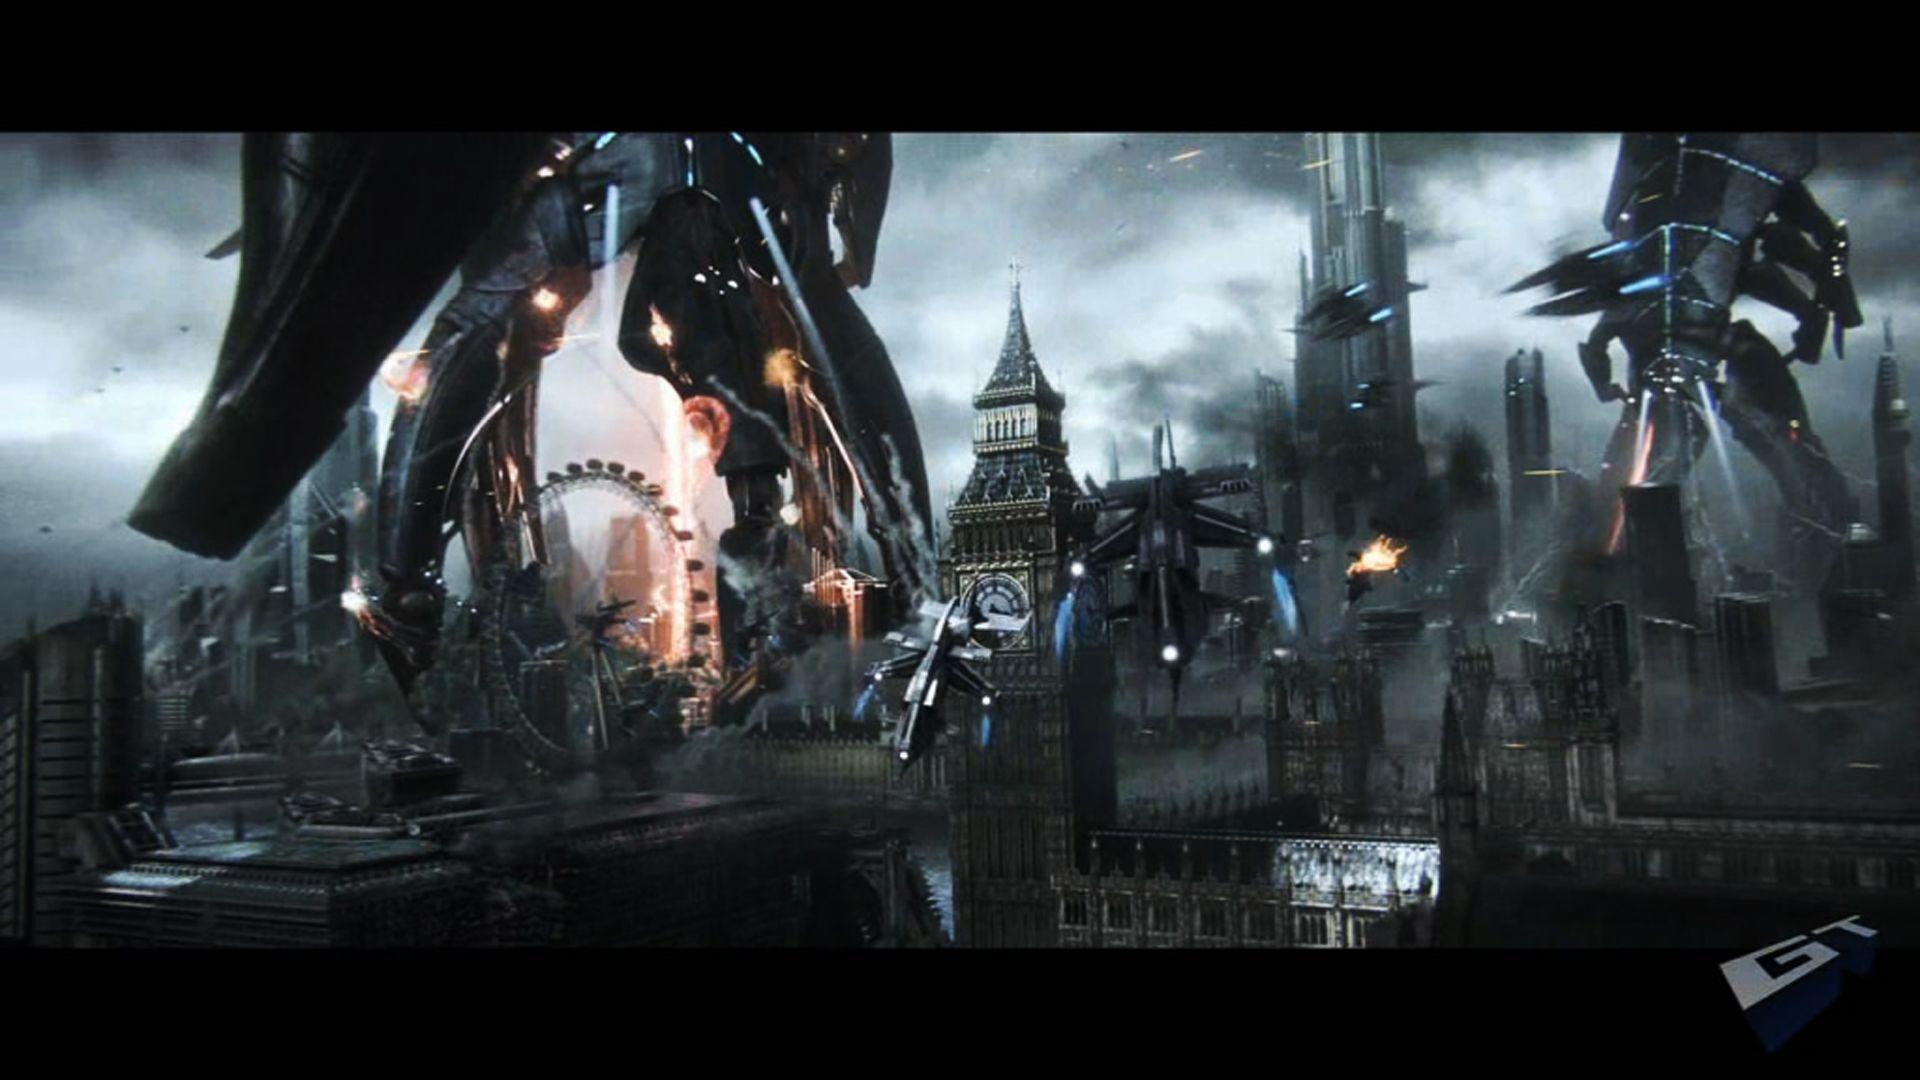 reaper, London, Mass Effect 3 Wallpaper / WallpaperJam.com